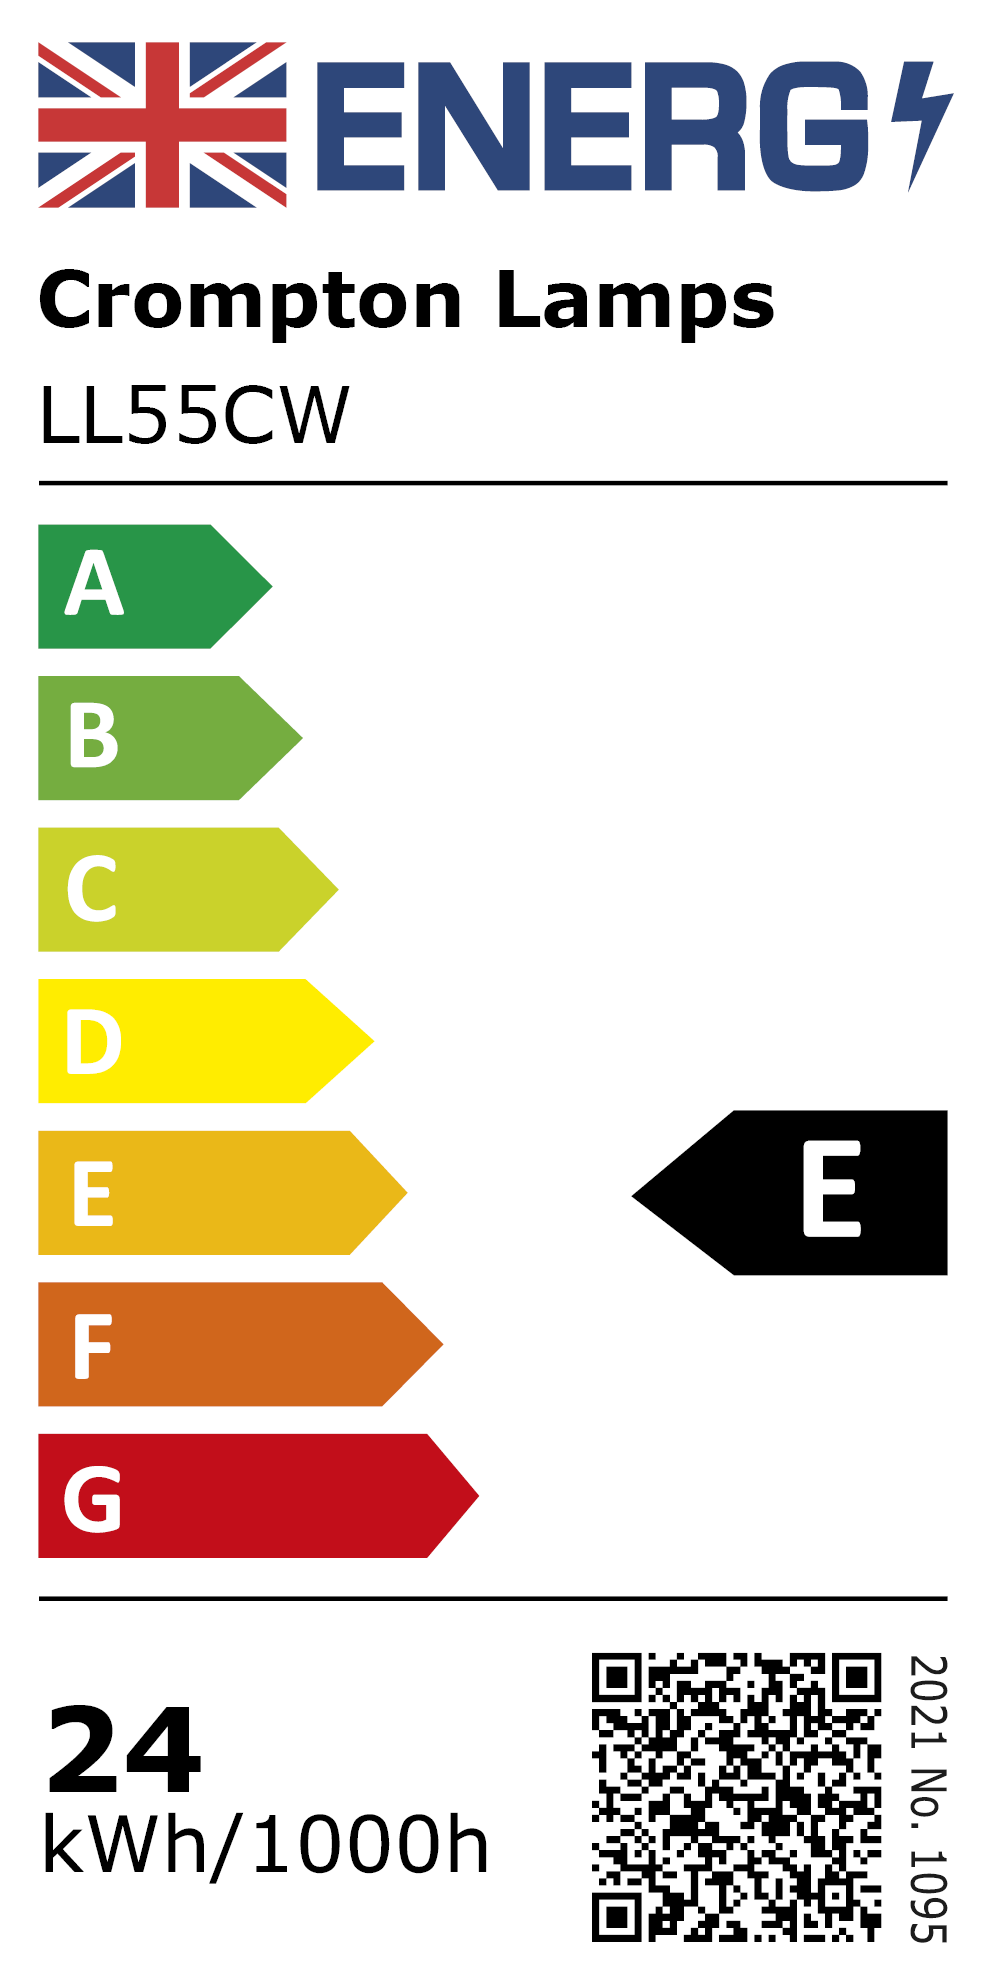 New 2021 Energy Rating Label: MPN LL55CW